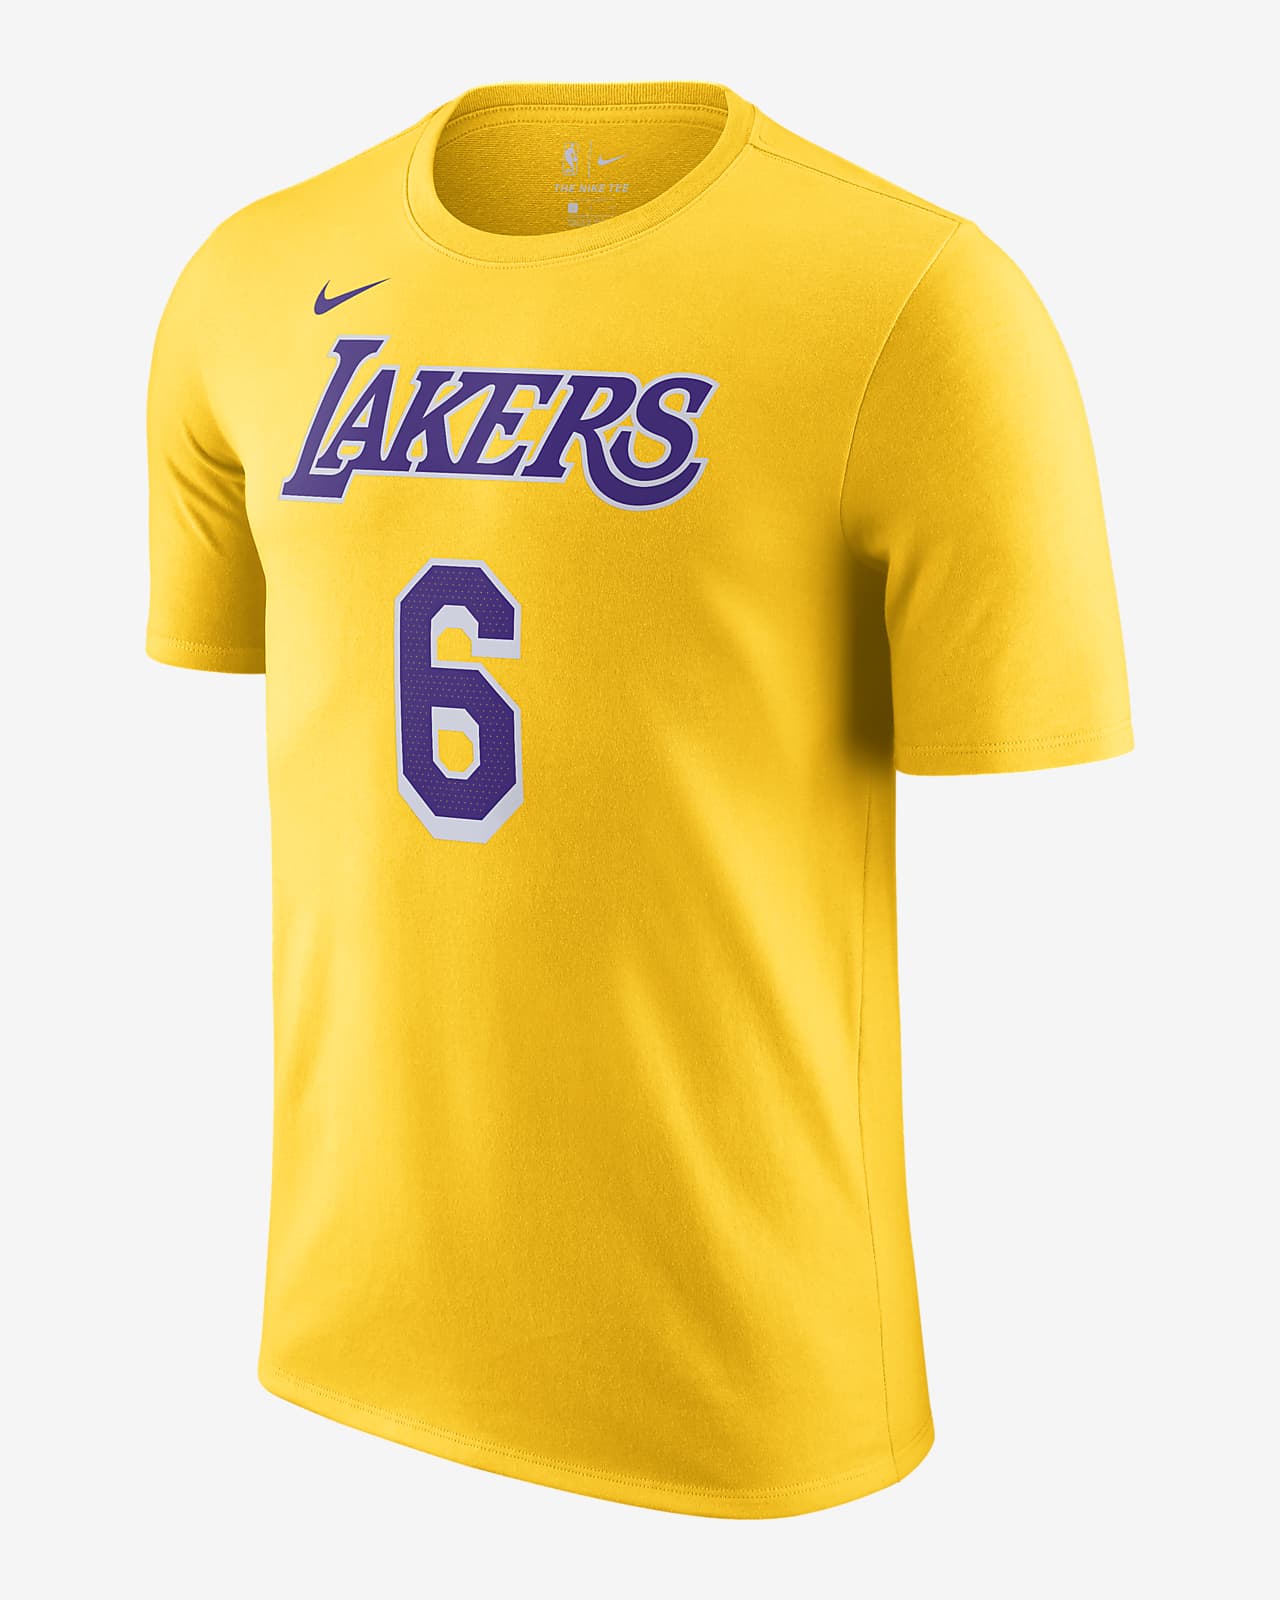 Los Angeles Men's Nike NBA T-Shirt. LU